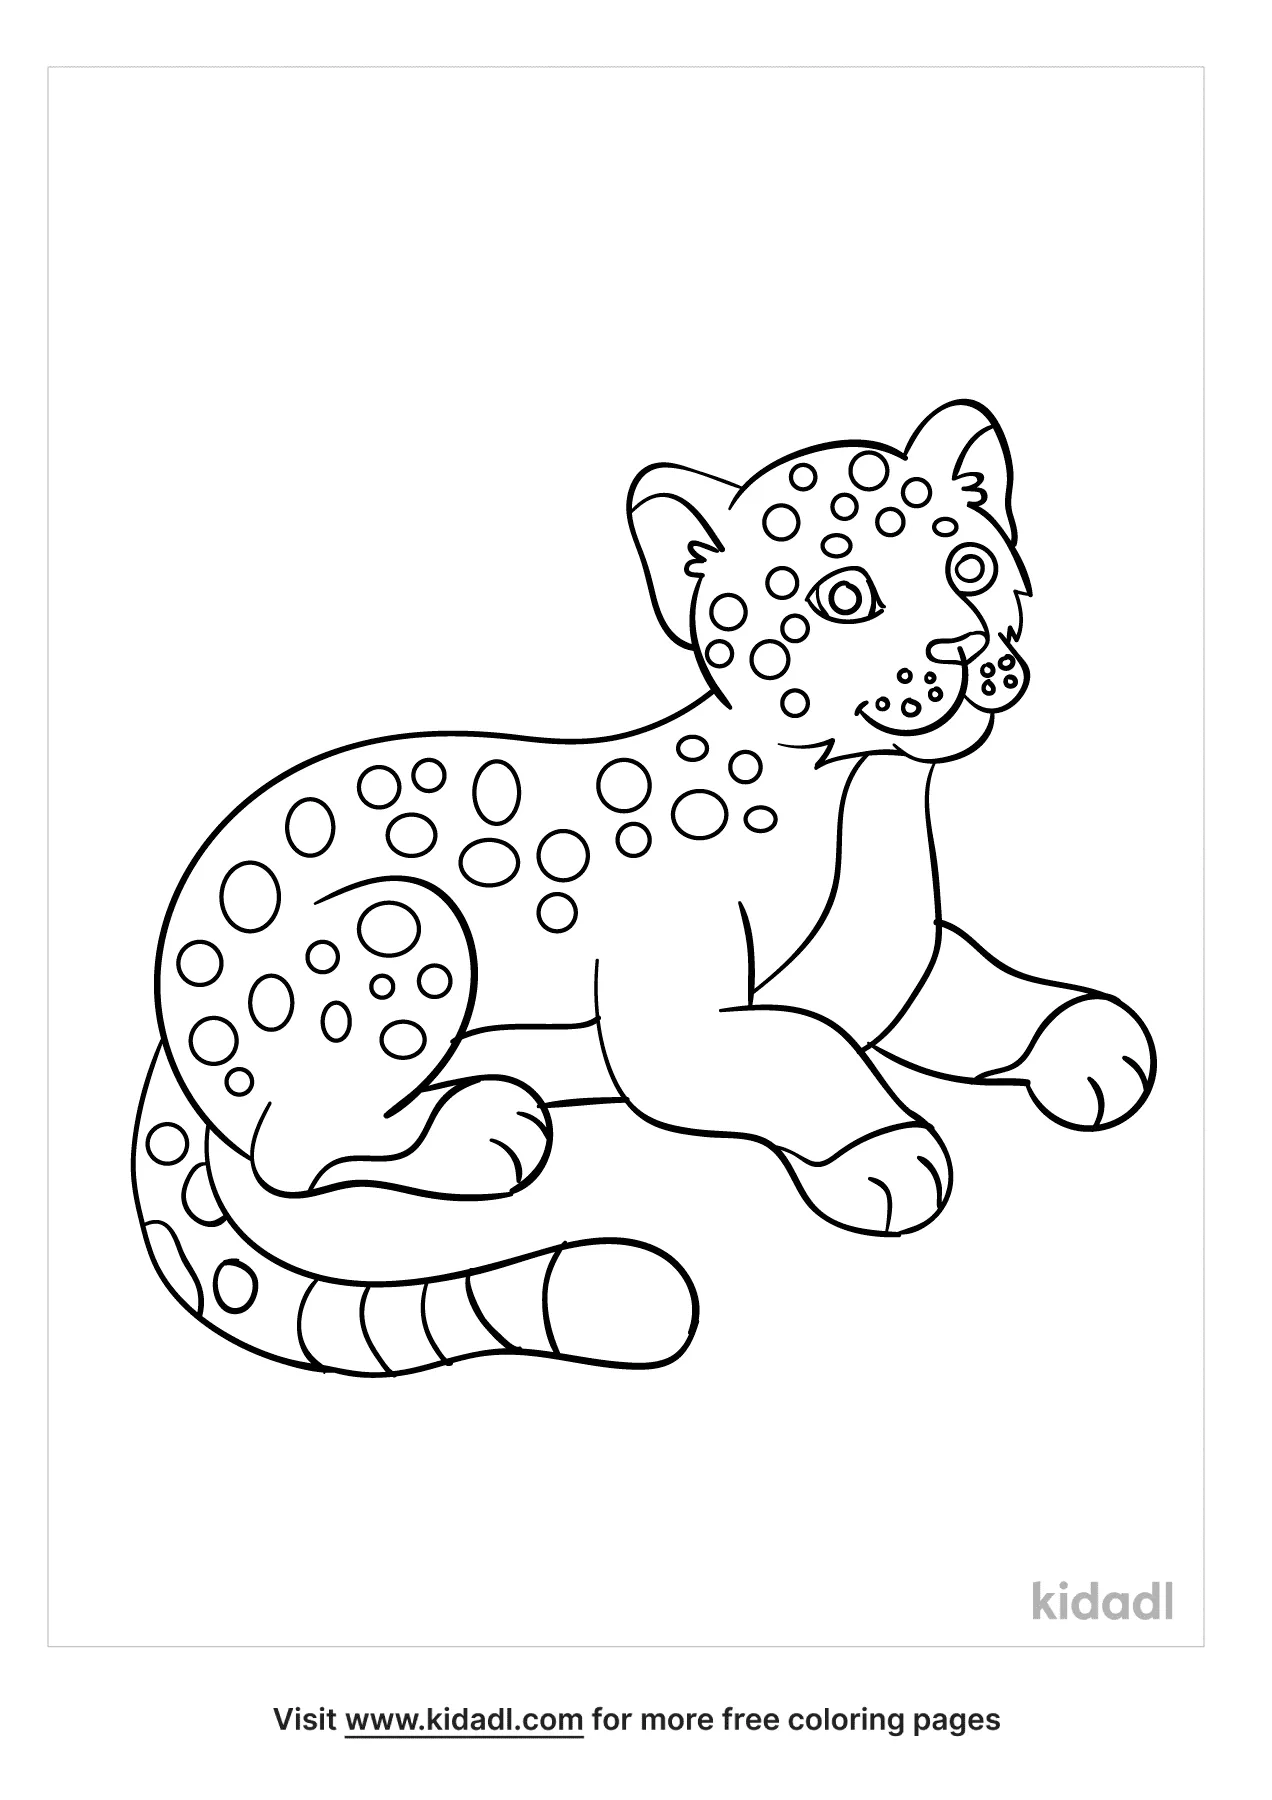 Детский рисунок ягуара